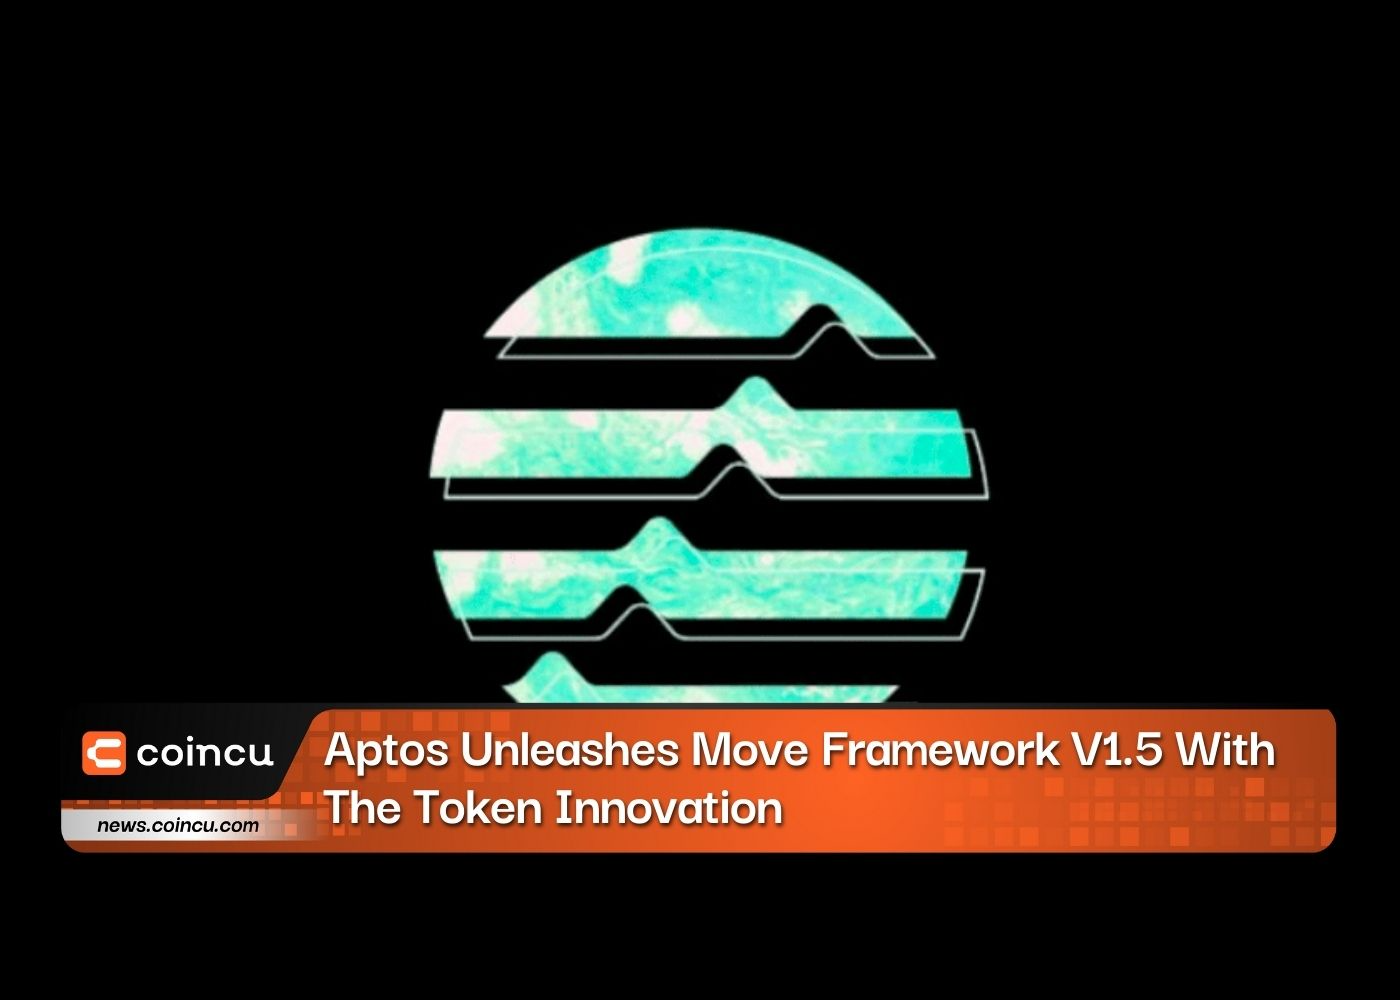 Aptos, 토큰 혁신으로 Move Framework V1.5 출시